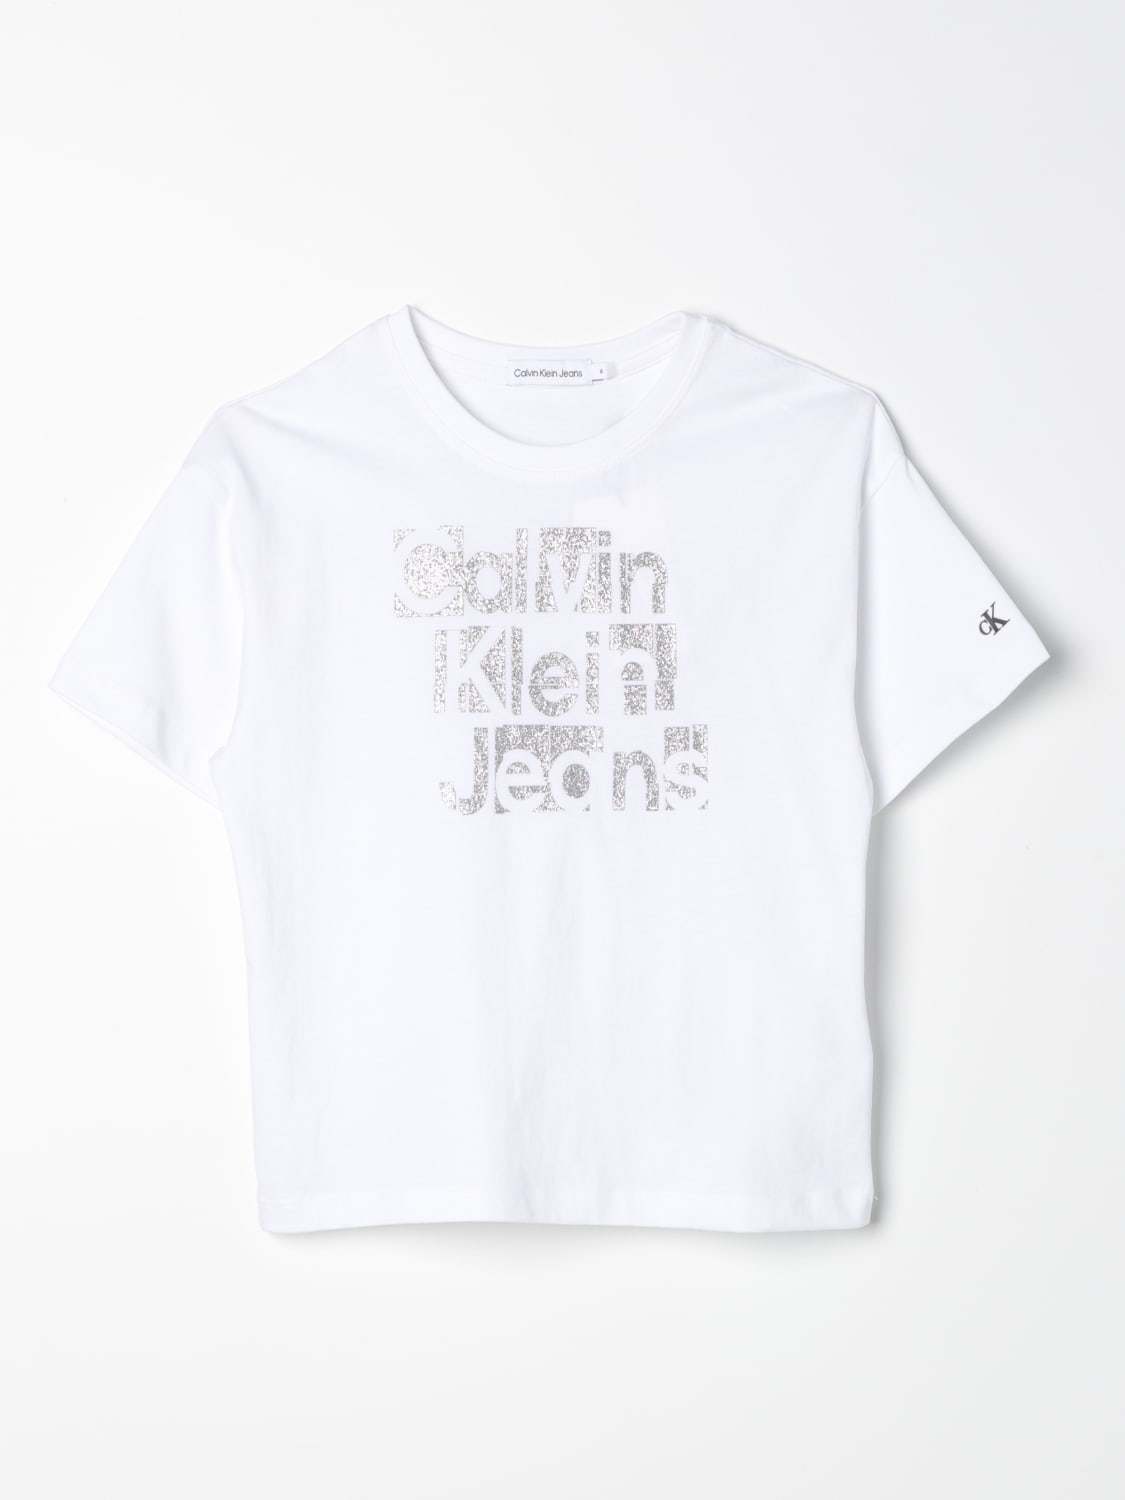 CK JEANS: t-shirt for girls - White